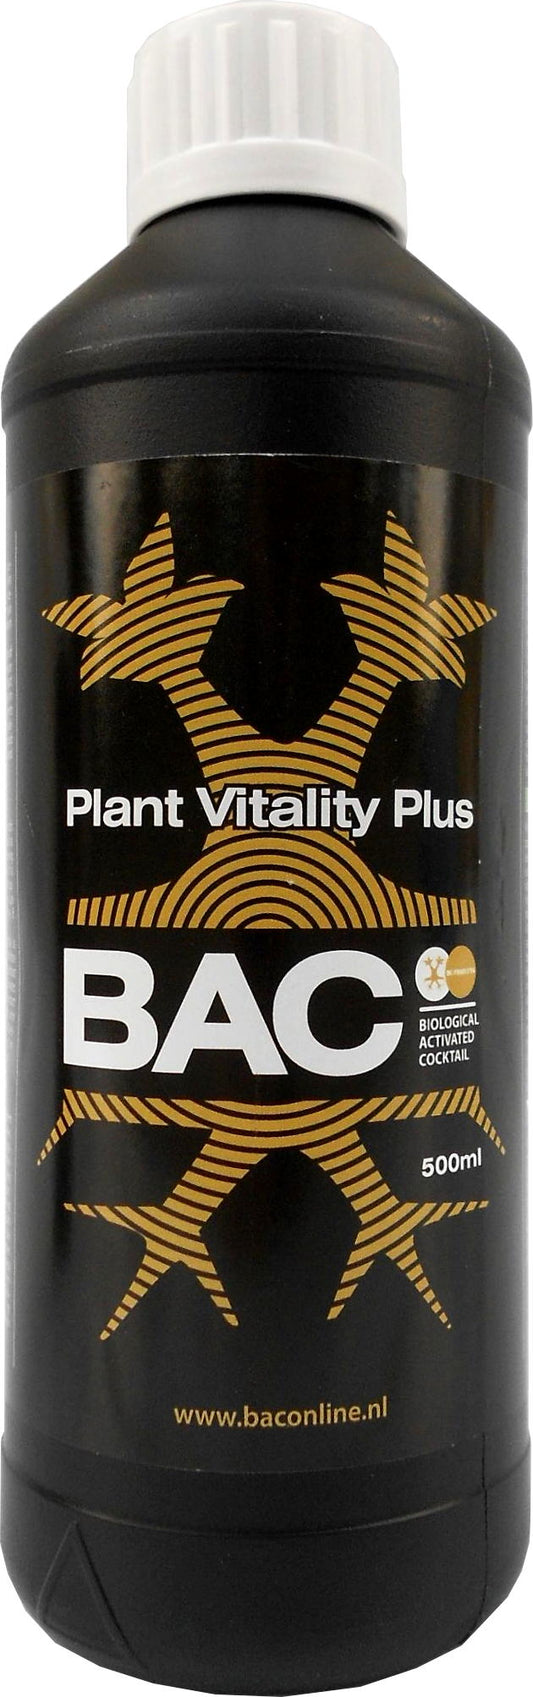 B.A.C. Plant Vitality Plus 500ml